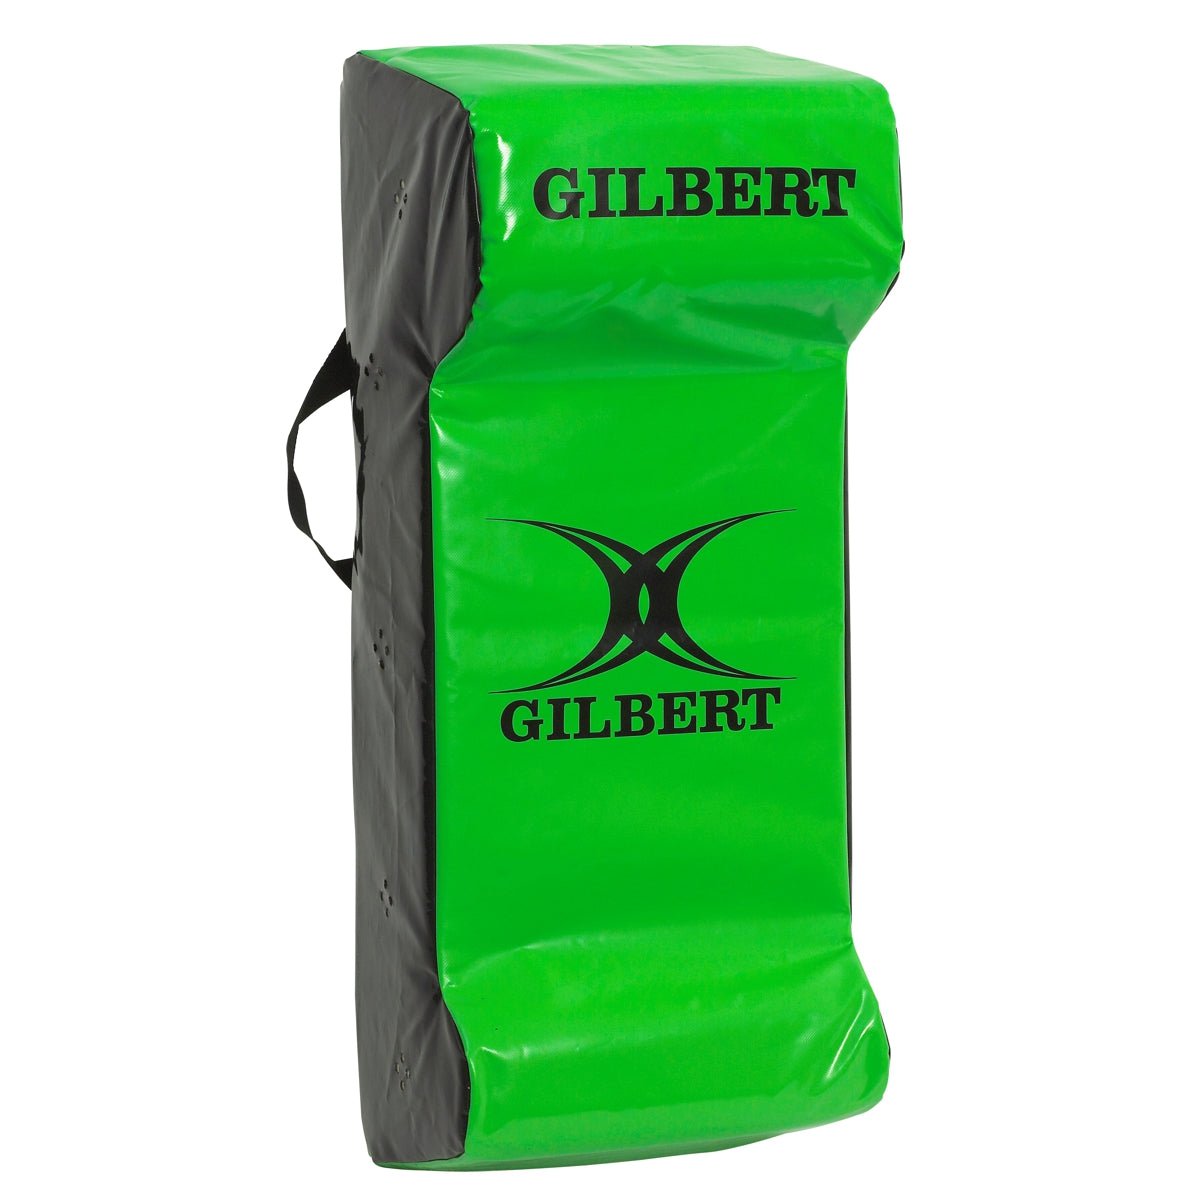 Gilbert Rugby Tackle Kissen - Senior Wedge - Kiwisport.de